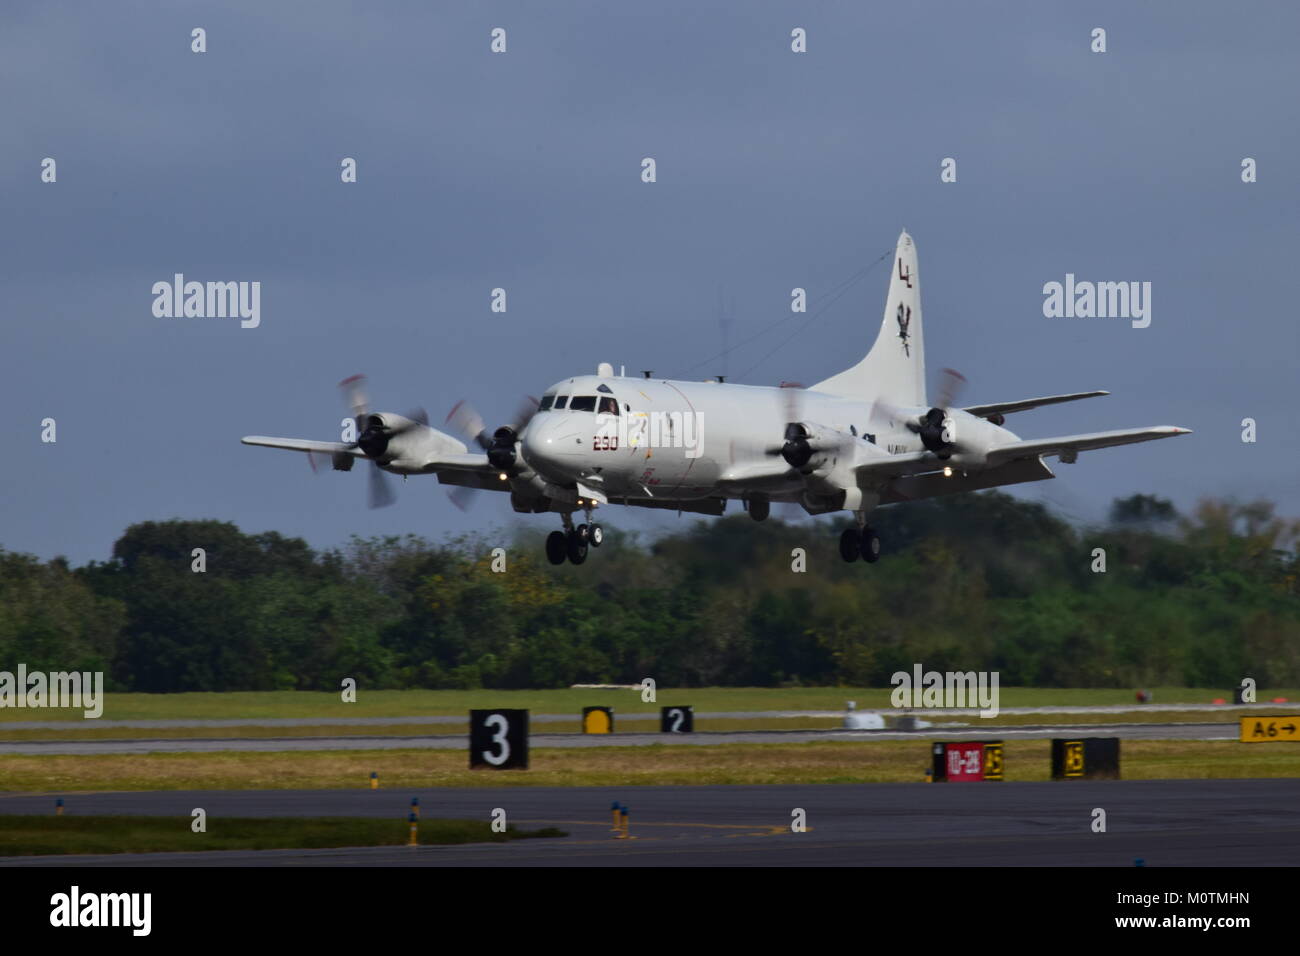 P3 Orion landing at Jacksonville airshow. Stock Photo